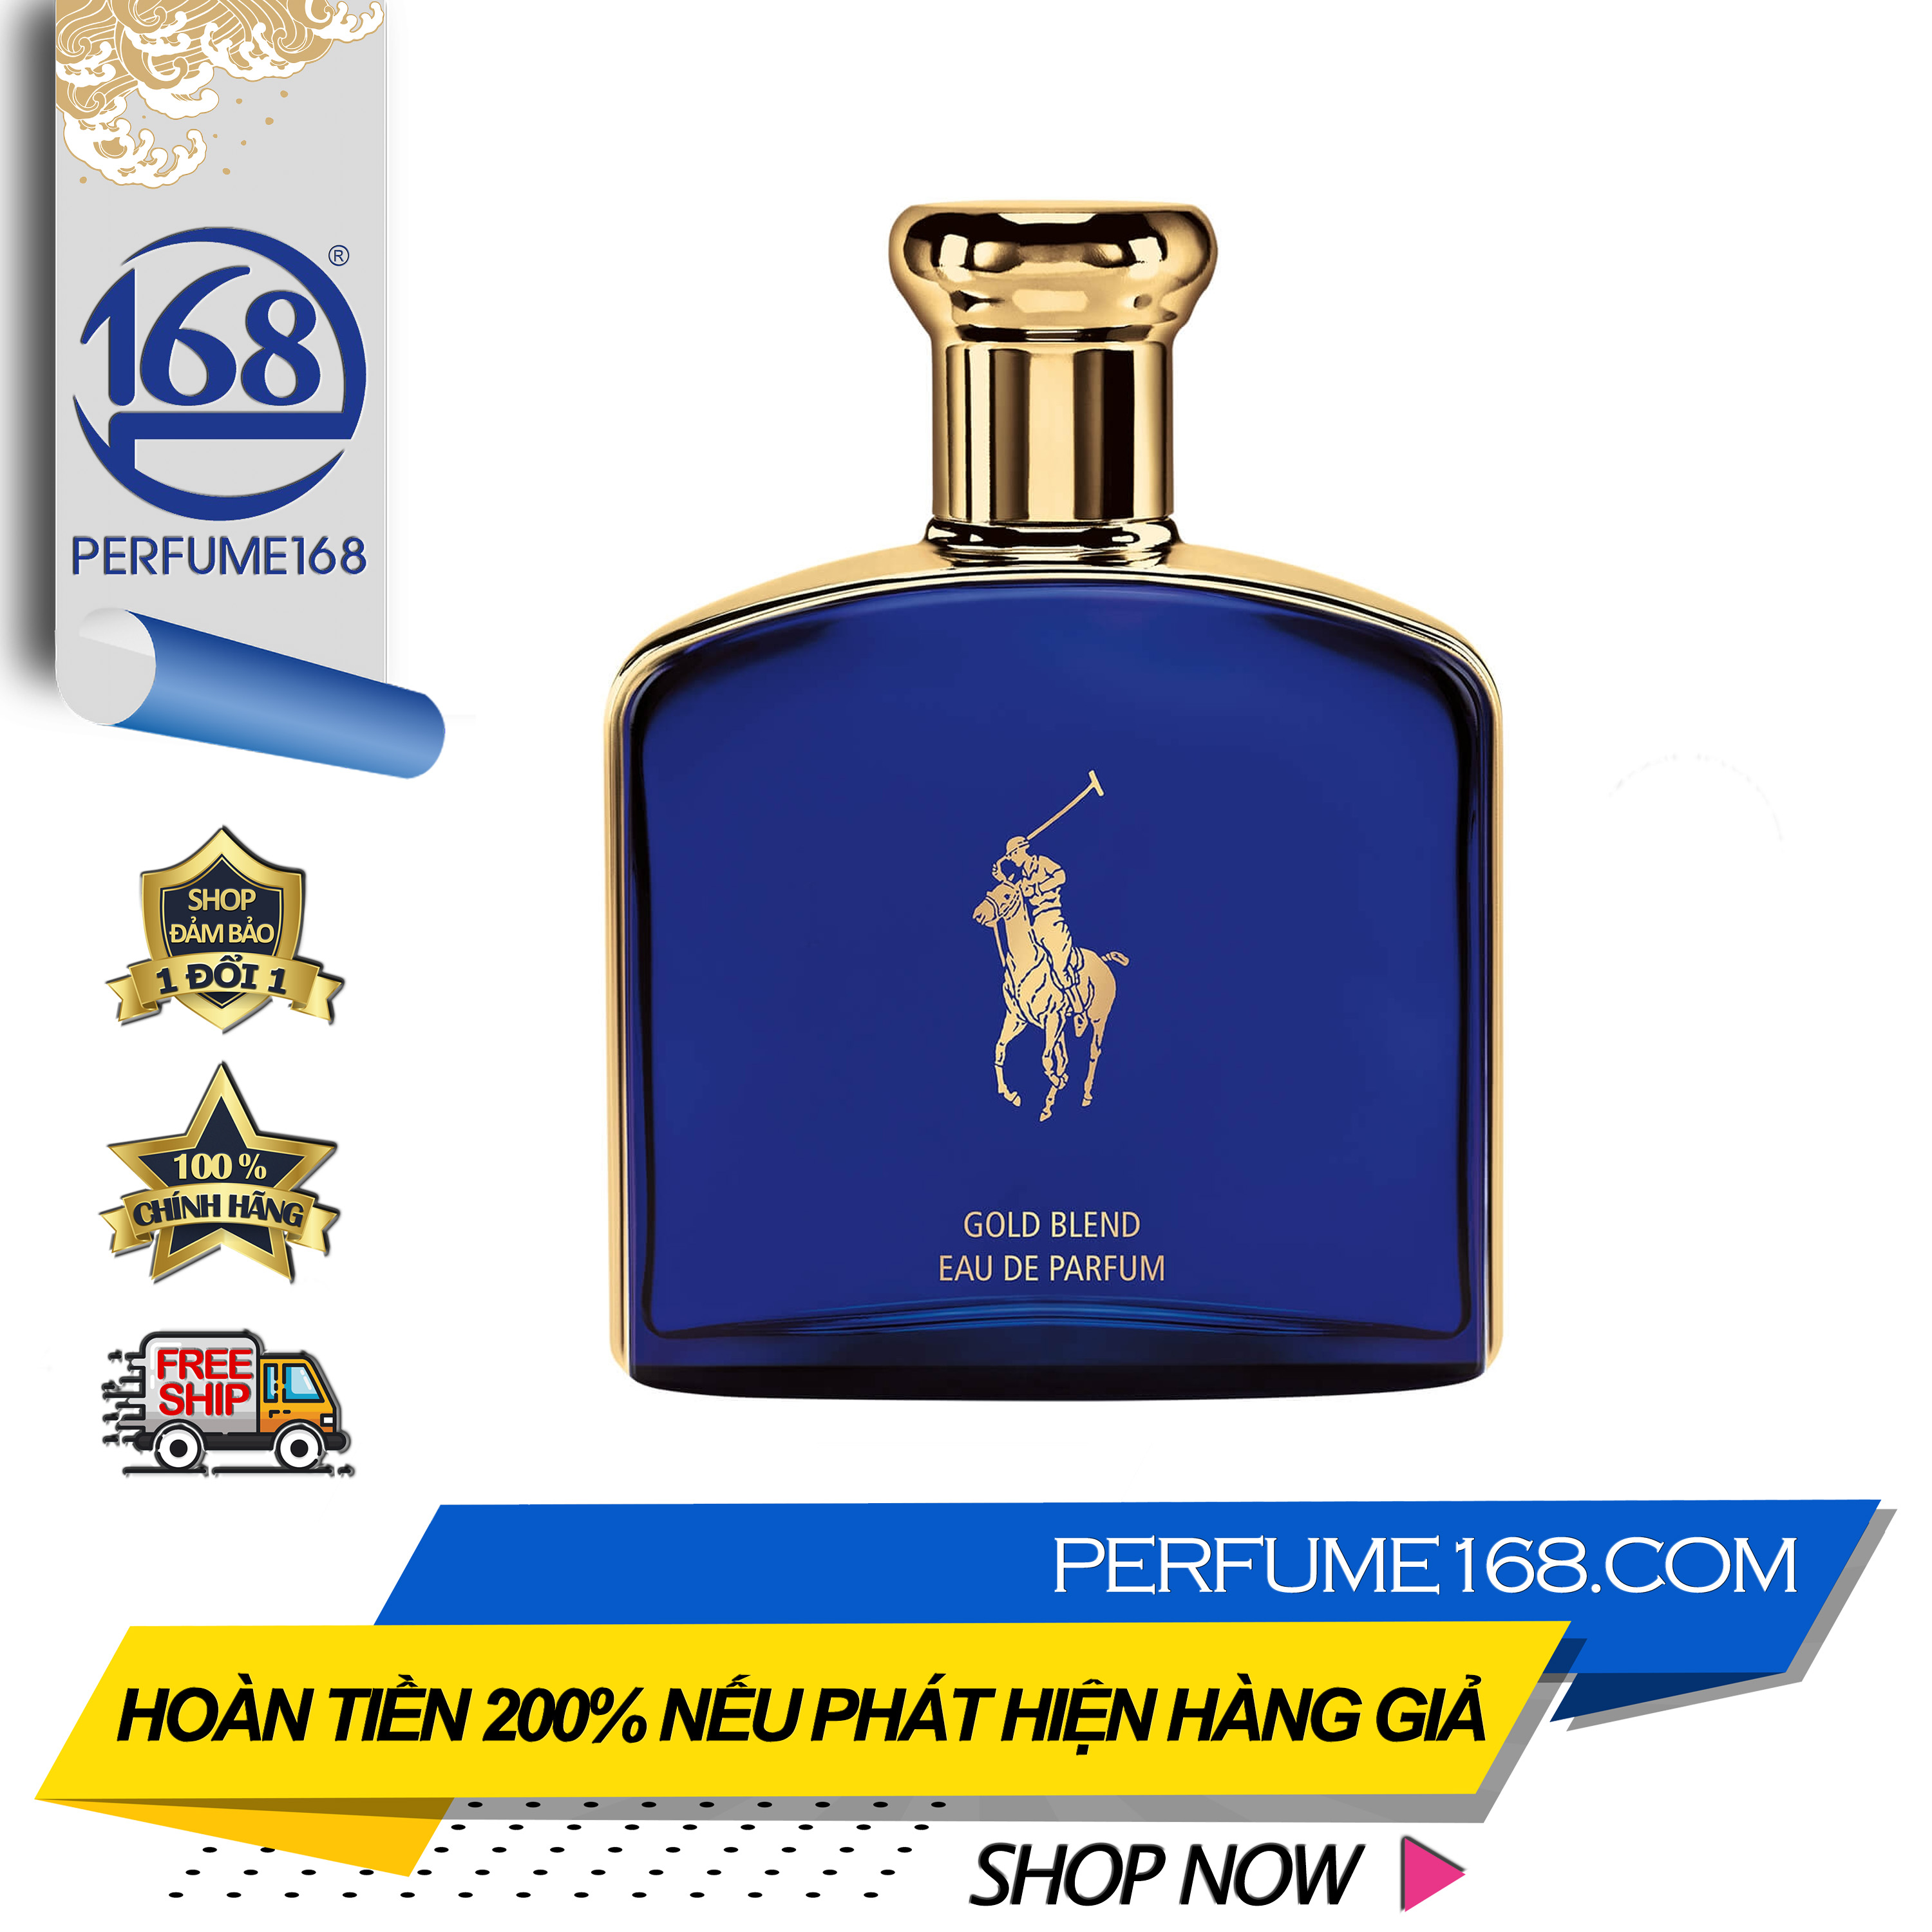 HCM]Nước hoa nam nước hoa cao cấp Ralph Lauren Polo Blue Gold Blend giá tốt  tại Perfume168 